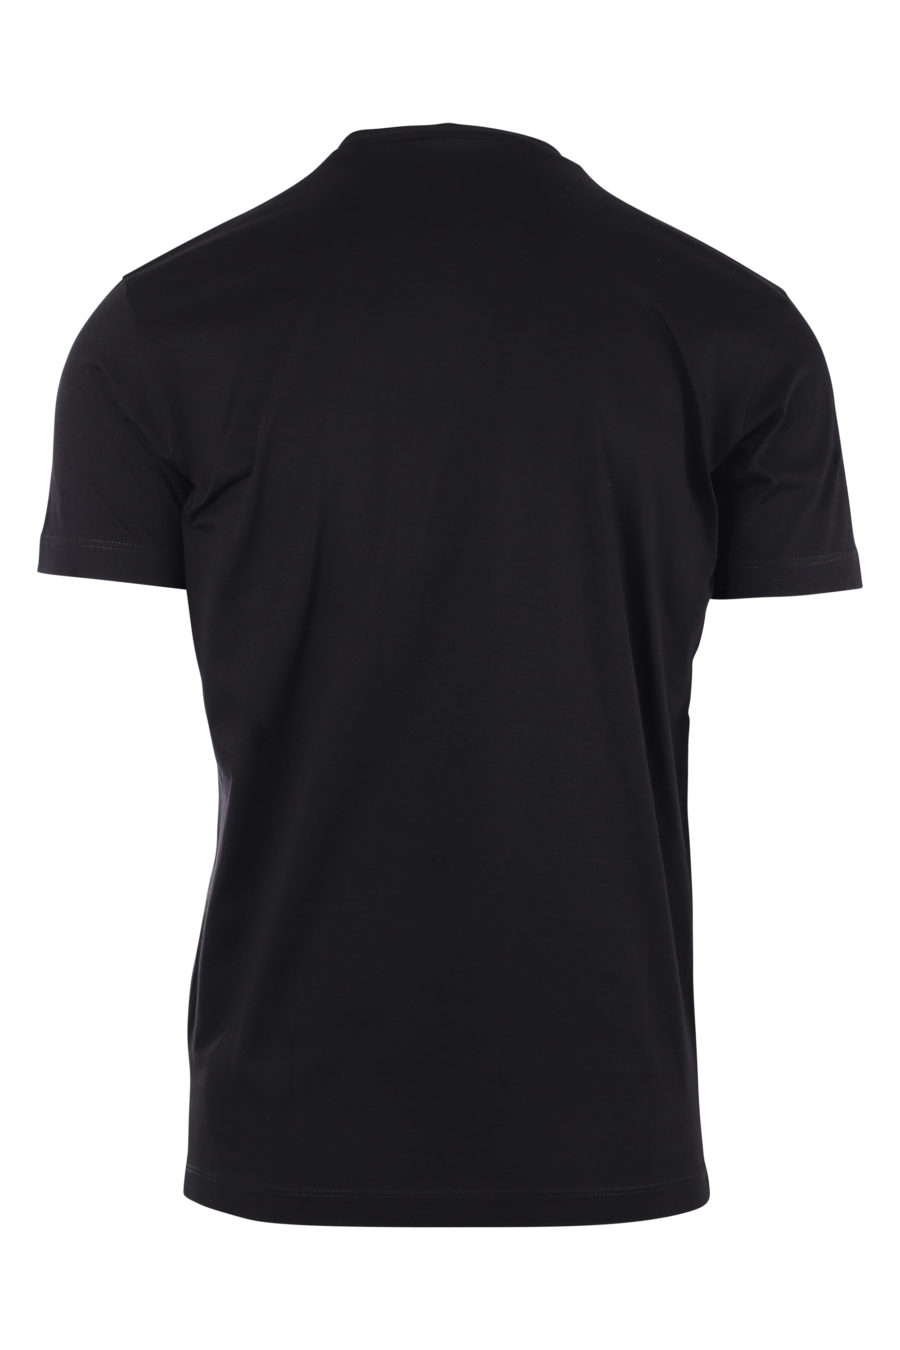 Camiseta negra con logo ceresio 9 - IMG 9728